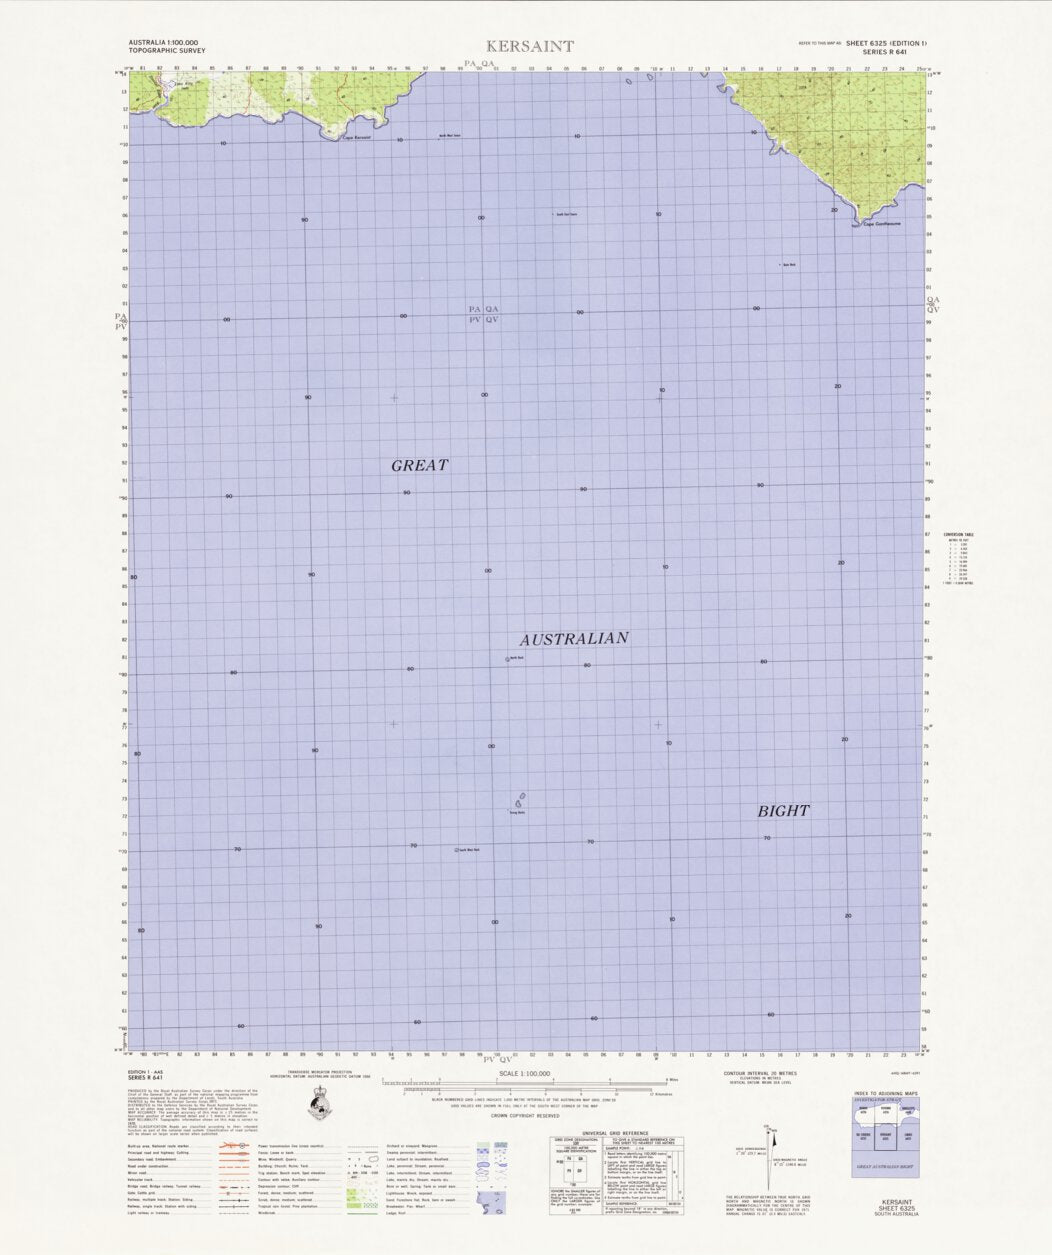 Kersaint (6325) Map by Geoscience Australia | Avenza Maps